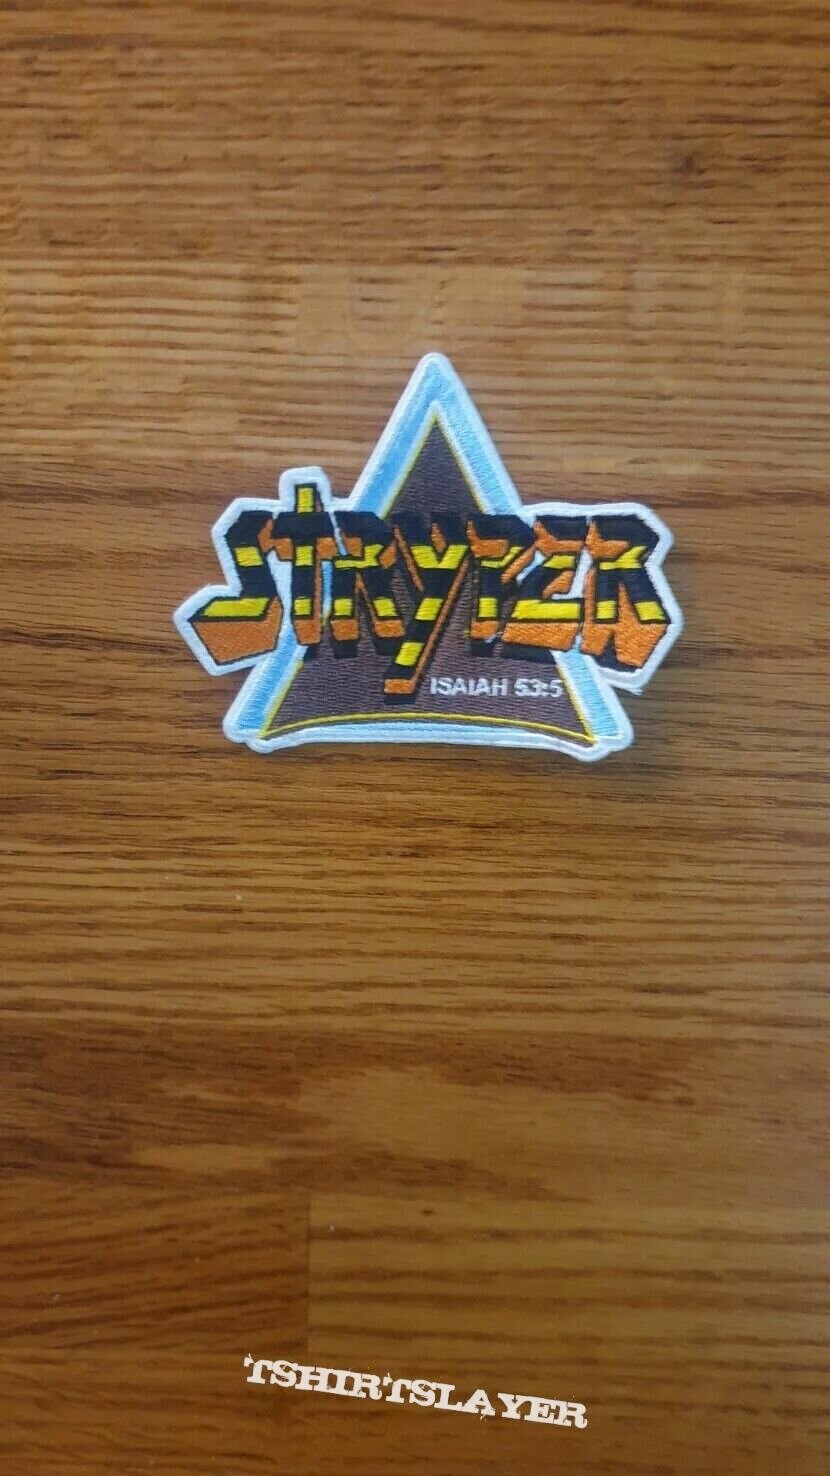 STRYPER triangle logo patch